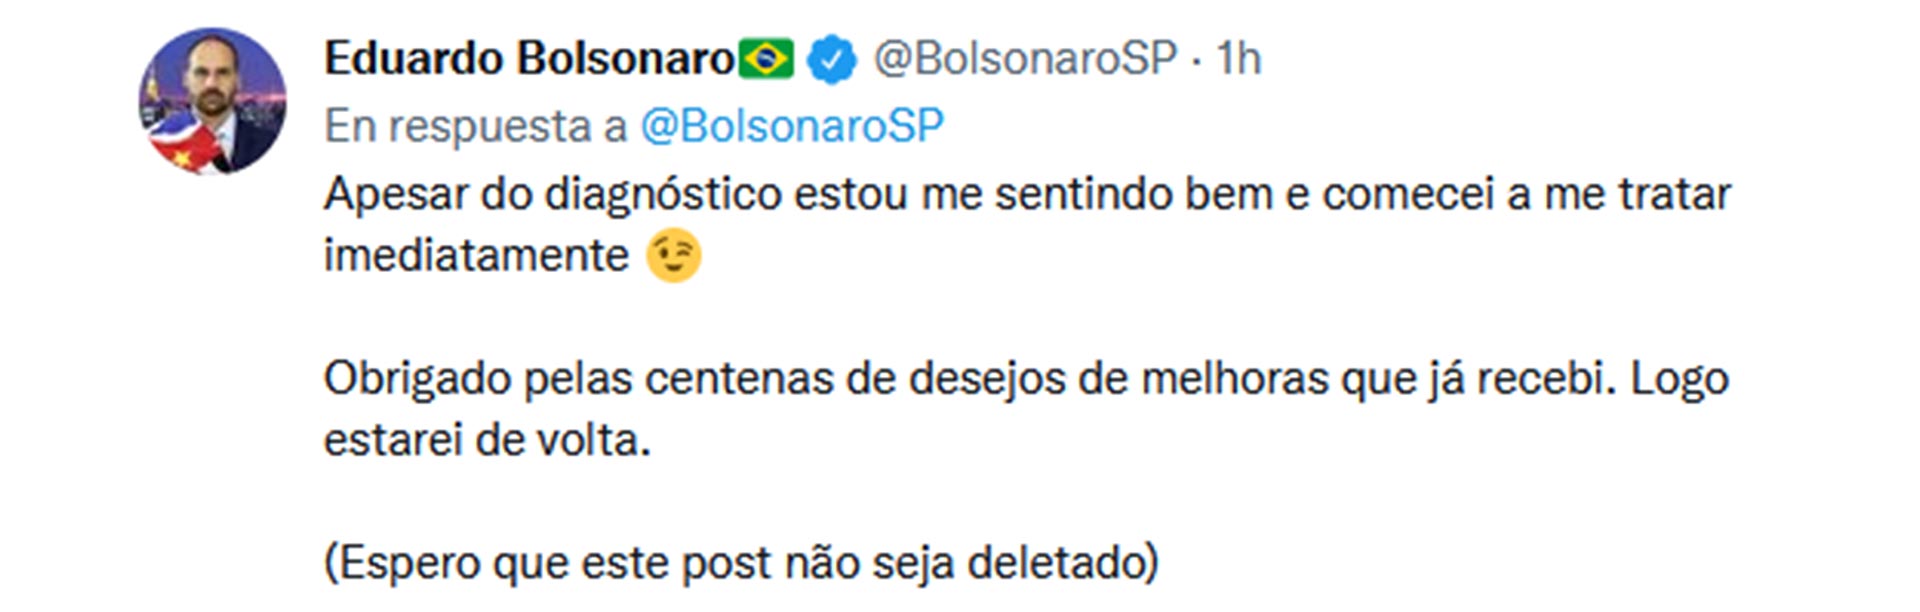 ¿NO ERA UNA GRIPEZINHA? El diputado Eduardo Bolsonaro, hijo del presidente de Brasil, anunció que tiene coronavirus